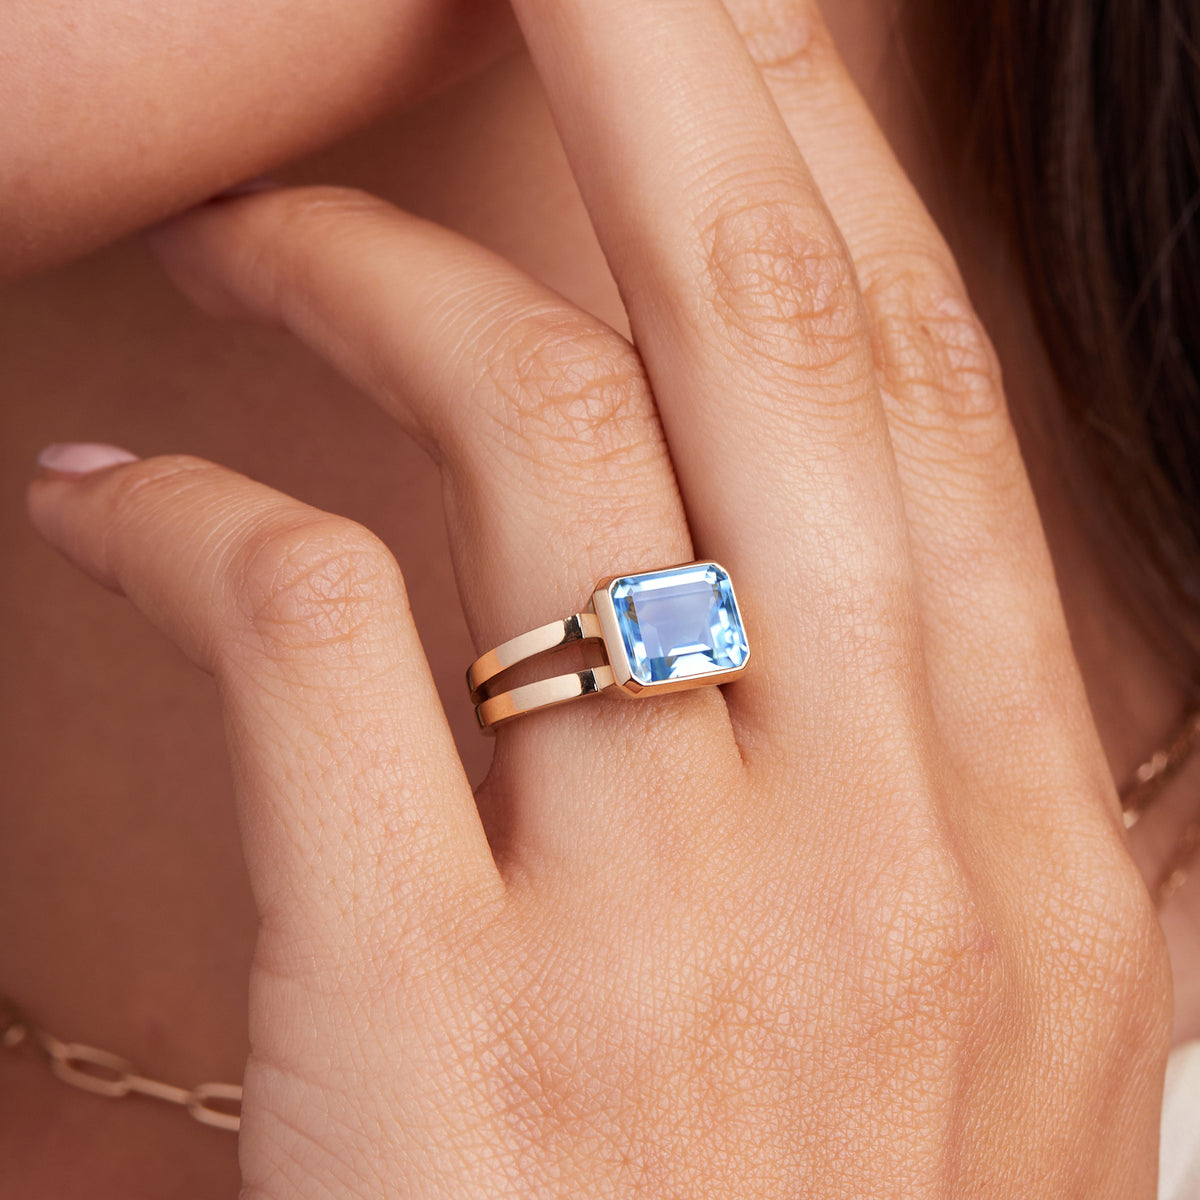 Buy Aquamarine and Diamond Ring, Emerald Cut Aquamarine Engagement Ring,  14K Yellow Gold Genuine Aquamarine Ring Wedding Ring Promise Ring Online in  India - Etsy